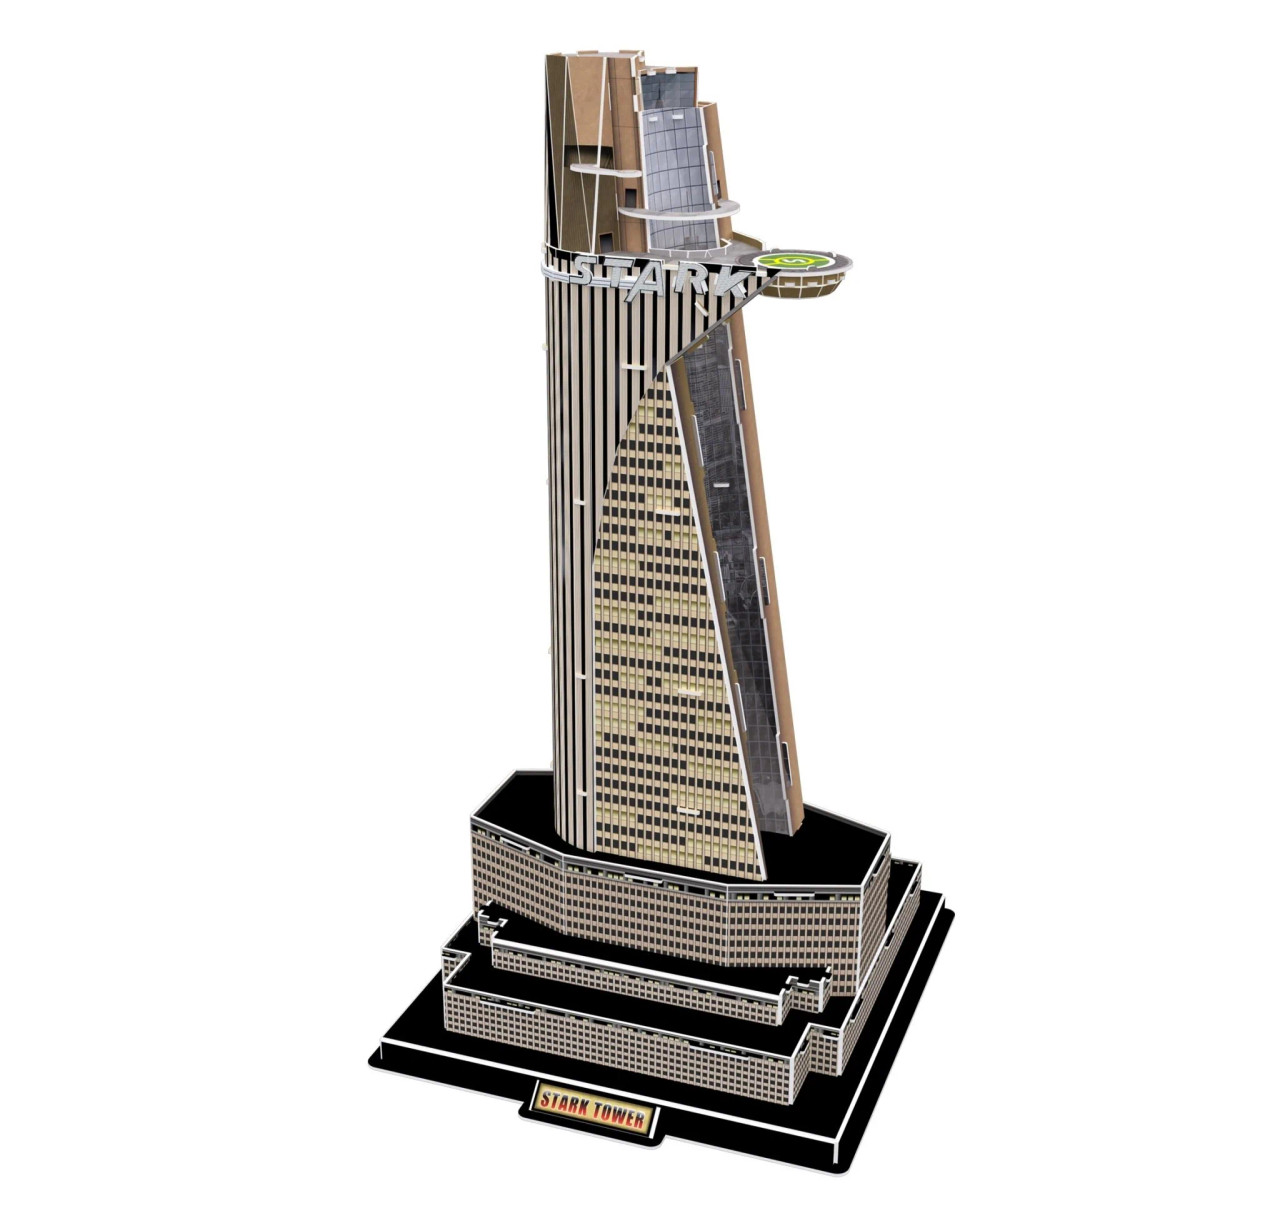 Marvel Avengers Tower 3D Model Puzzle Kit